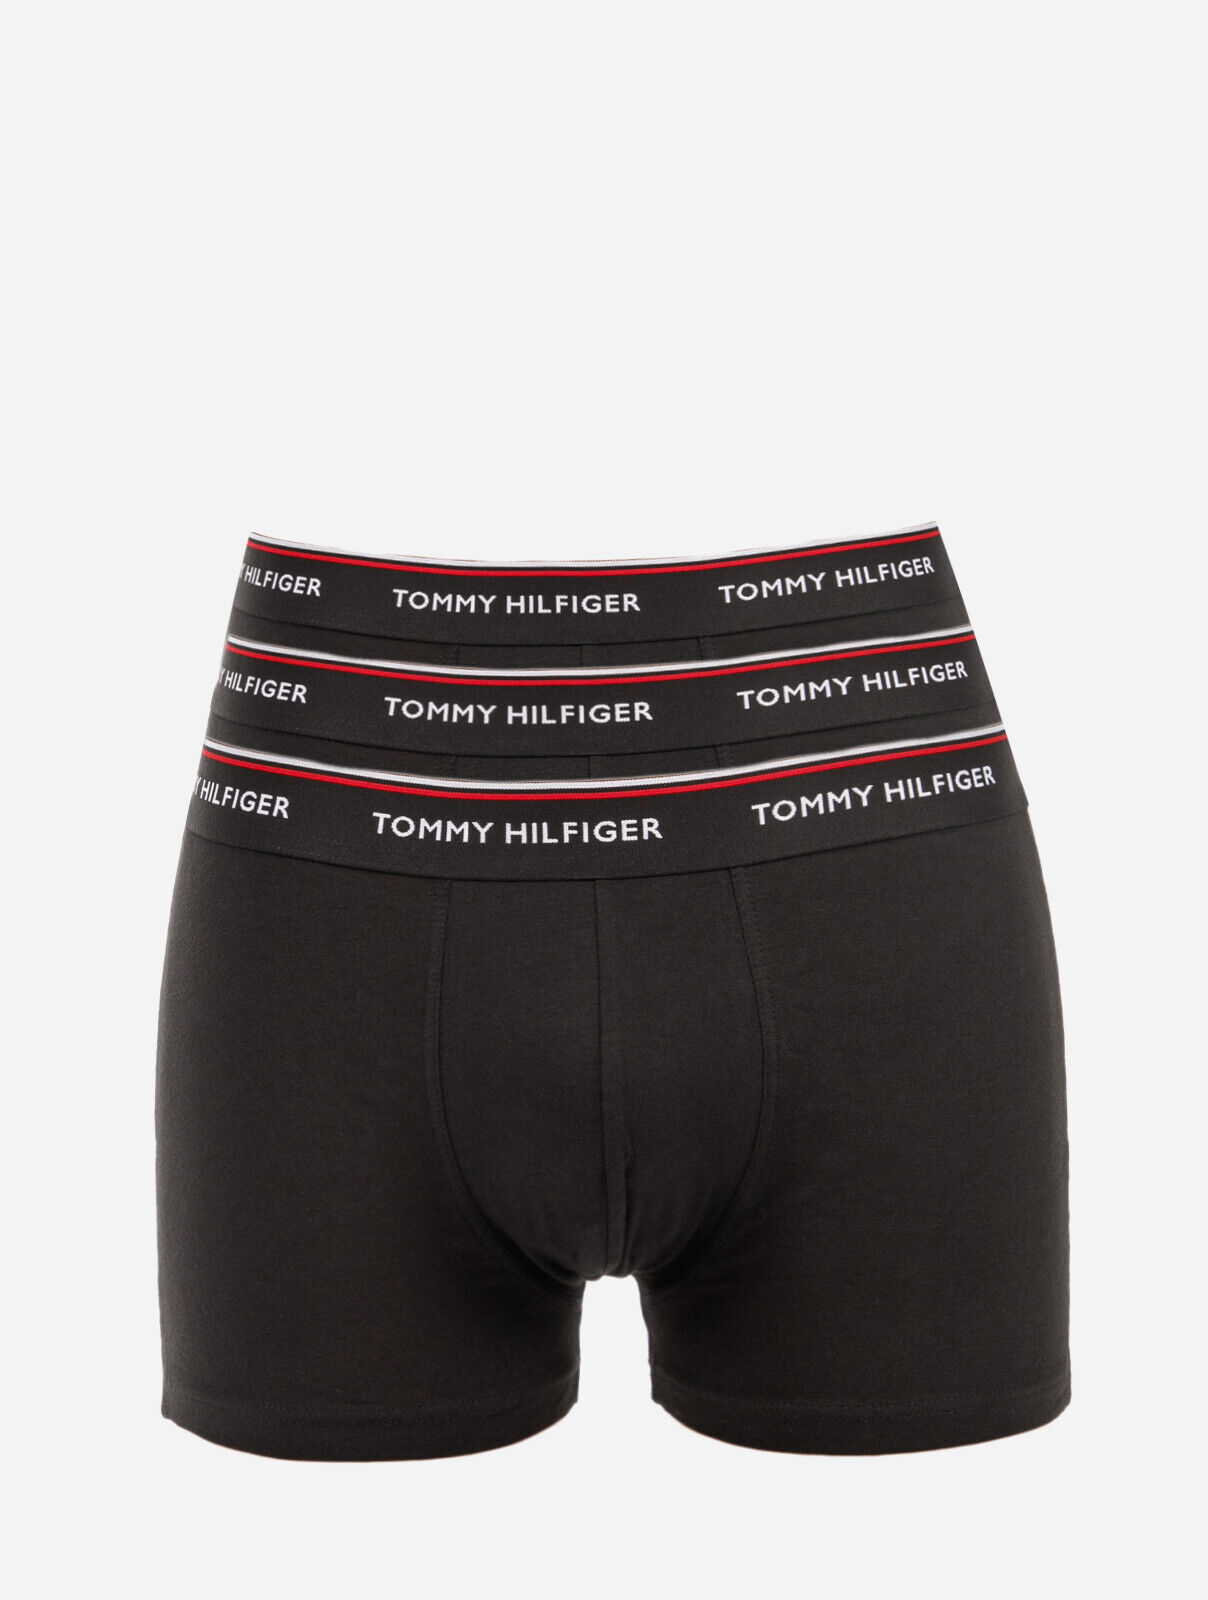 Tommy Hilfiger Stretch Boxers Trunk Shorts Underwear Set Of 3 Pcs Black -  Pepper Tree London